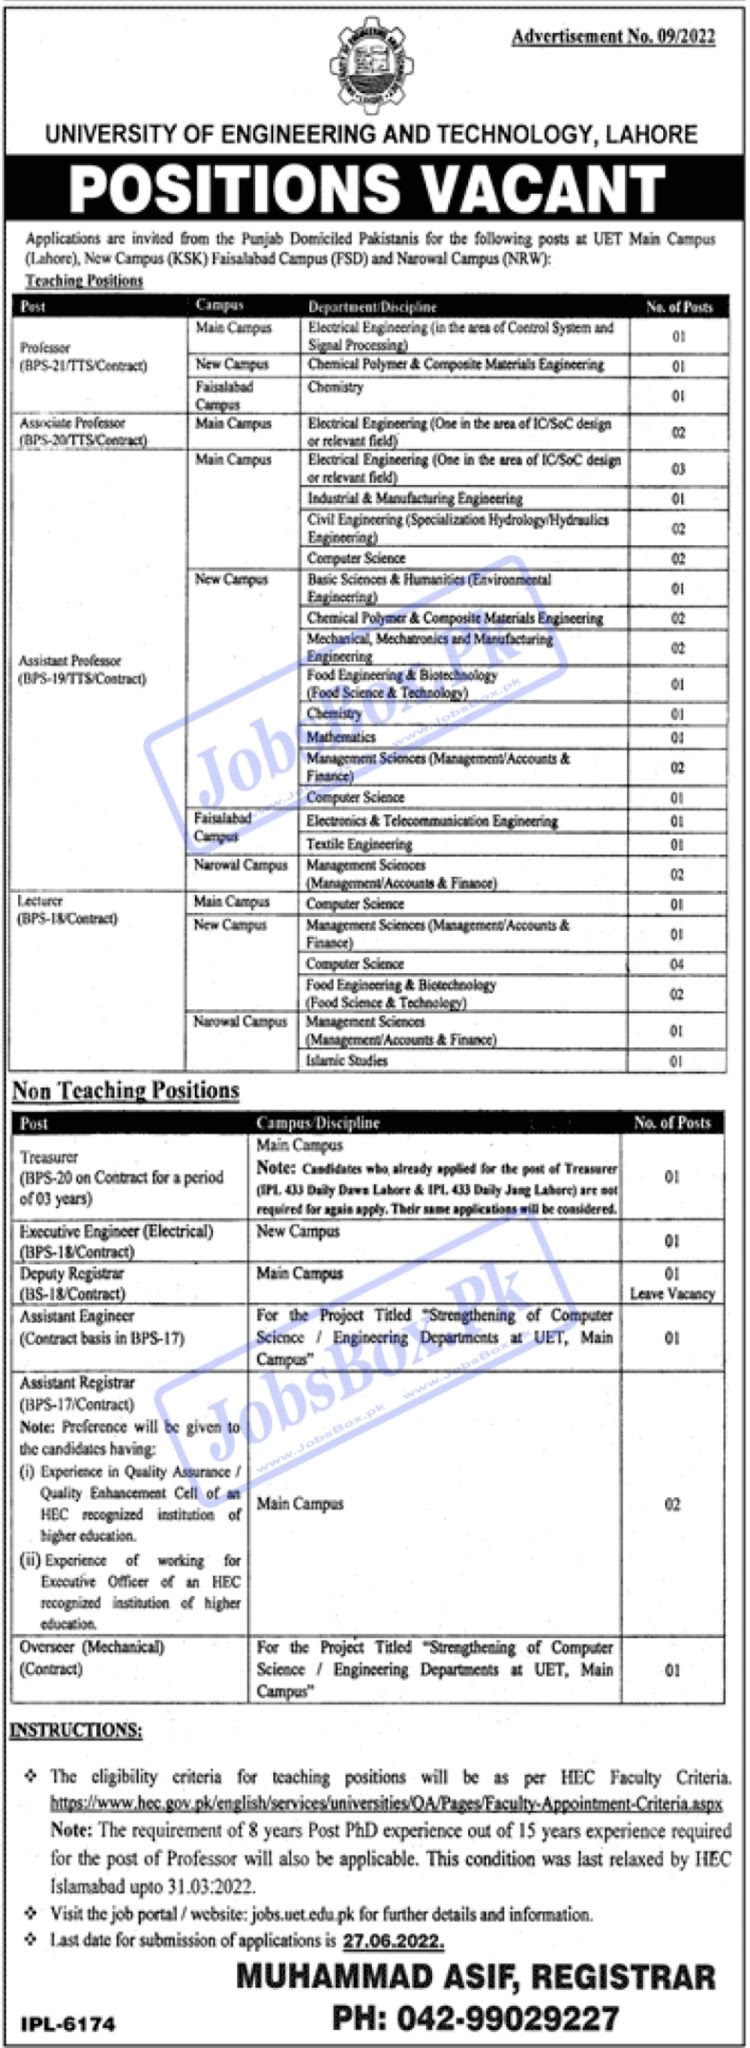 UET Lahore Jobs 2022 - University of Engineering and Technology Lahore Jobs 2022 - www.jobs.uet.edu.pk Online apply